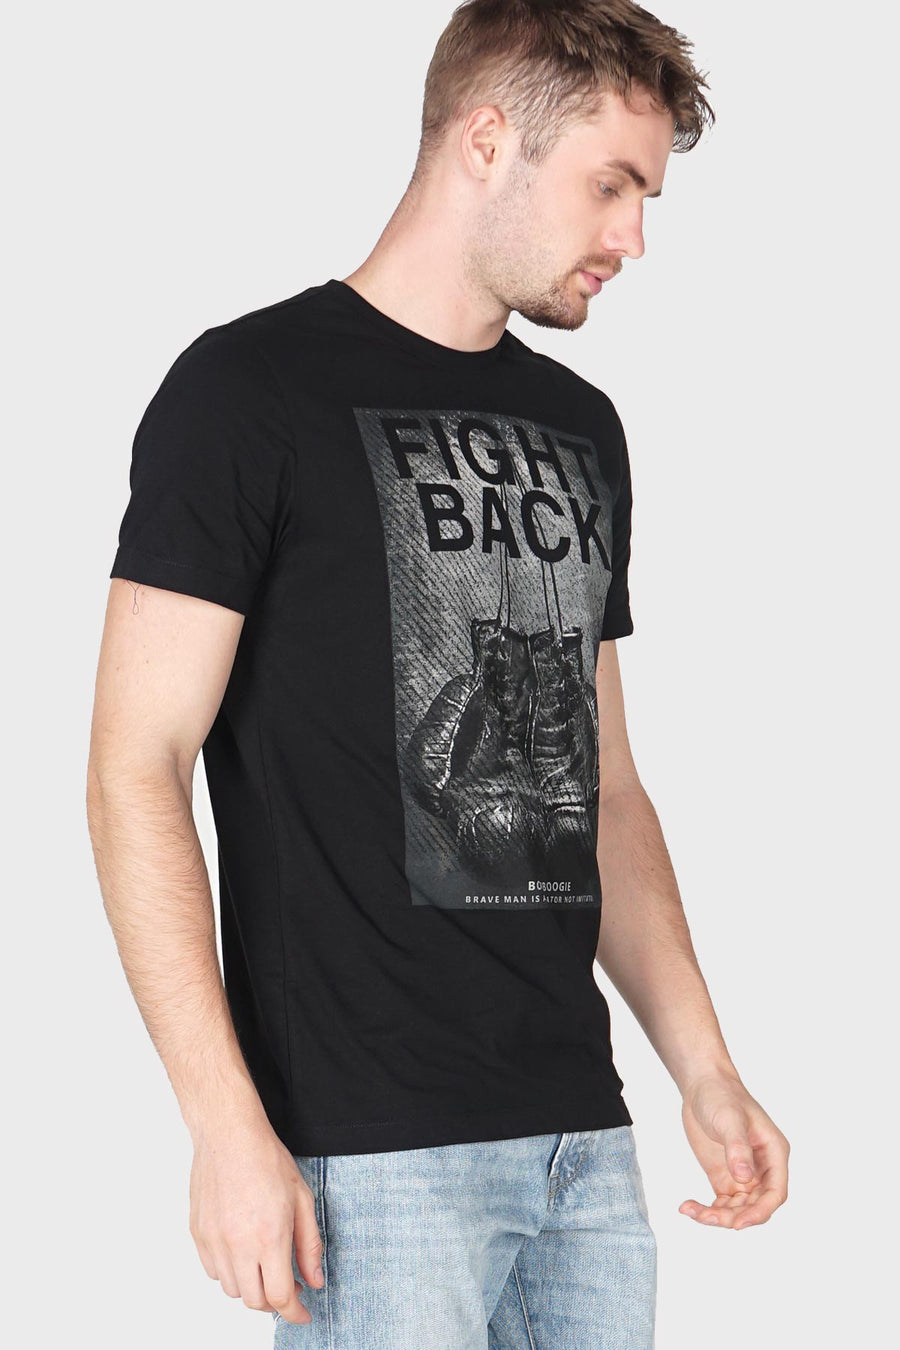 T-Shirt Lengan Pendek Fliction Black